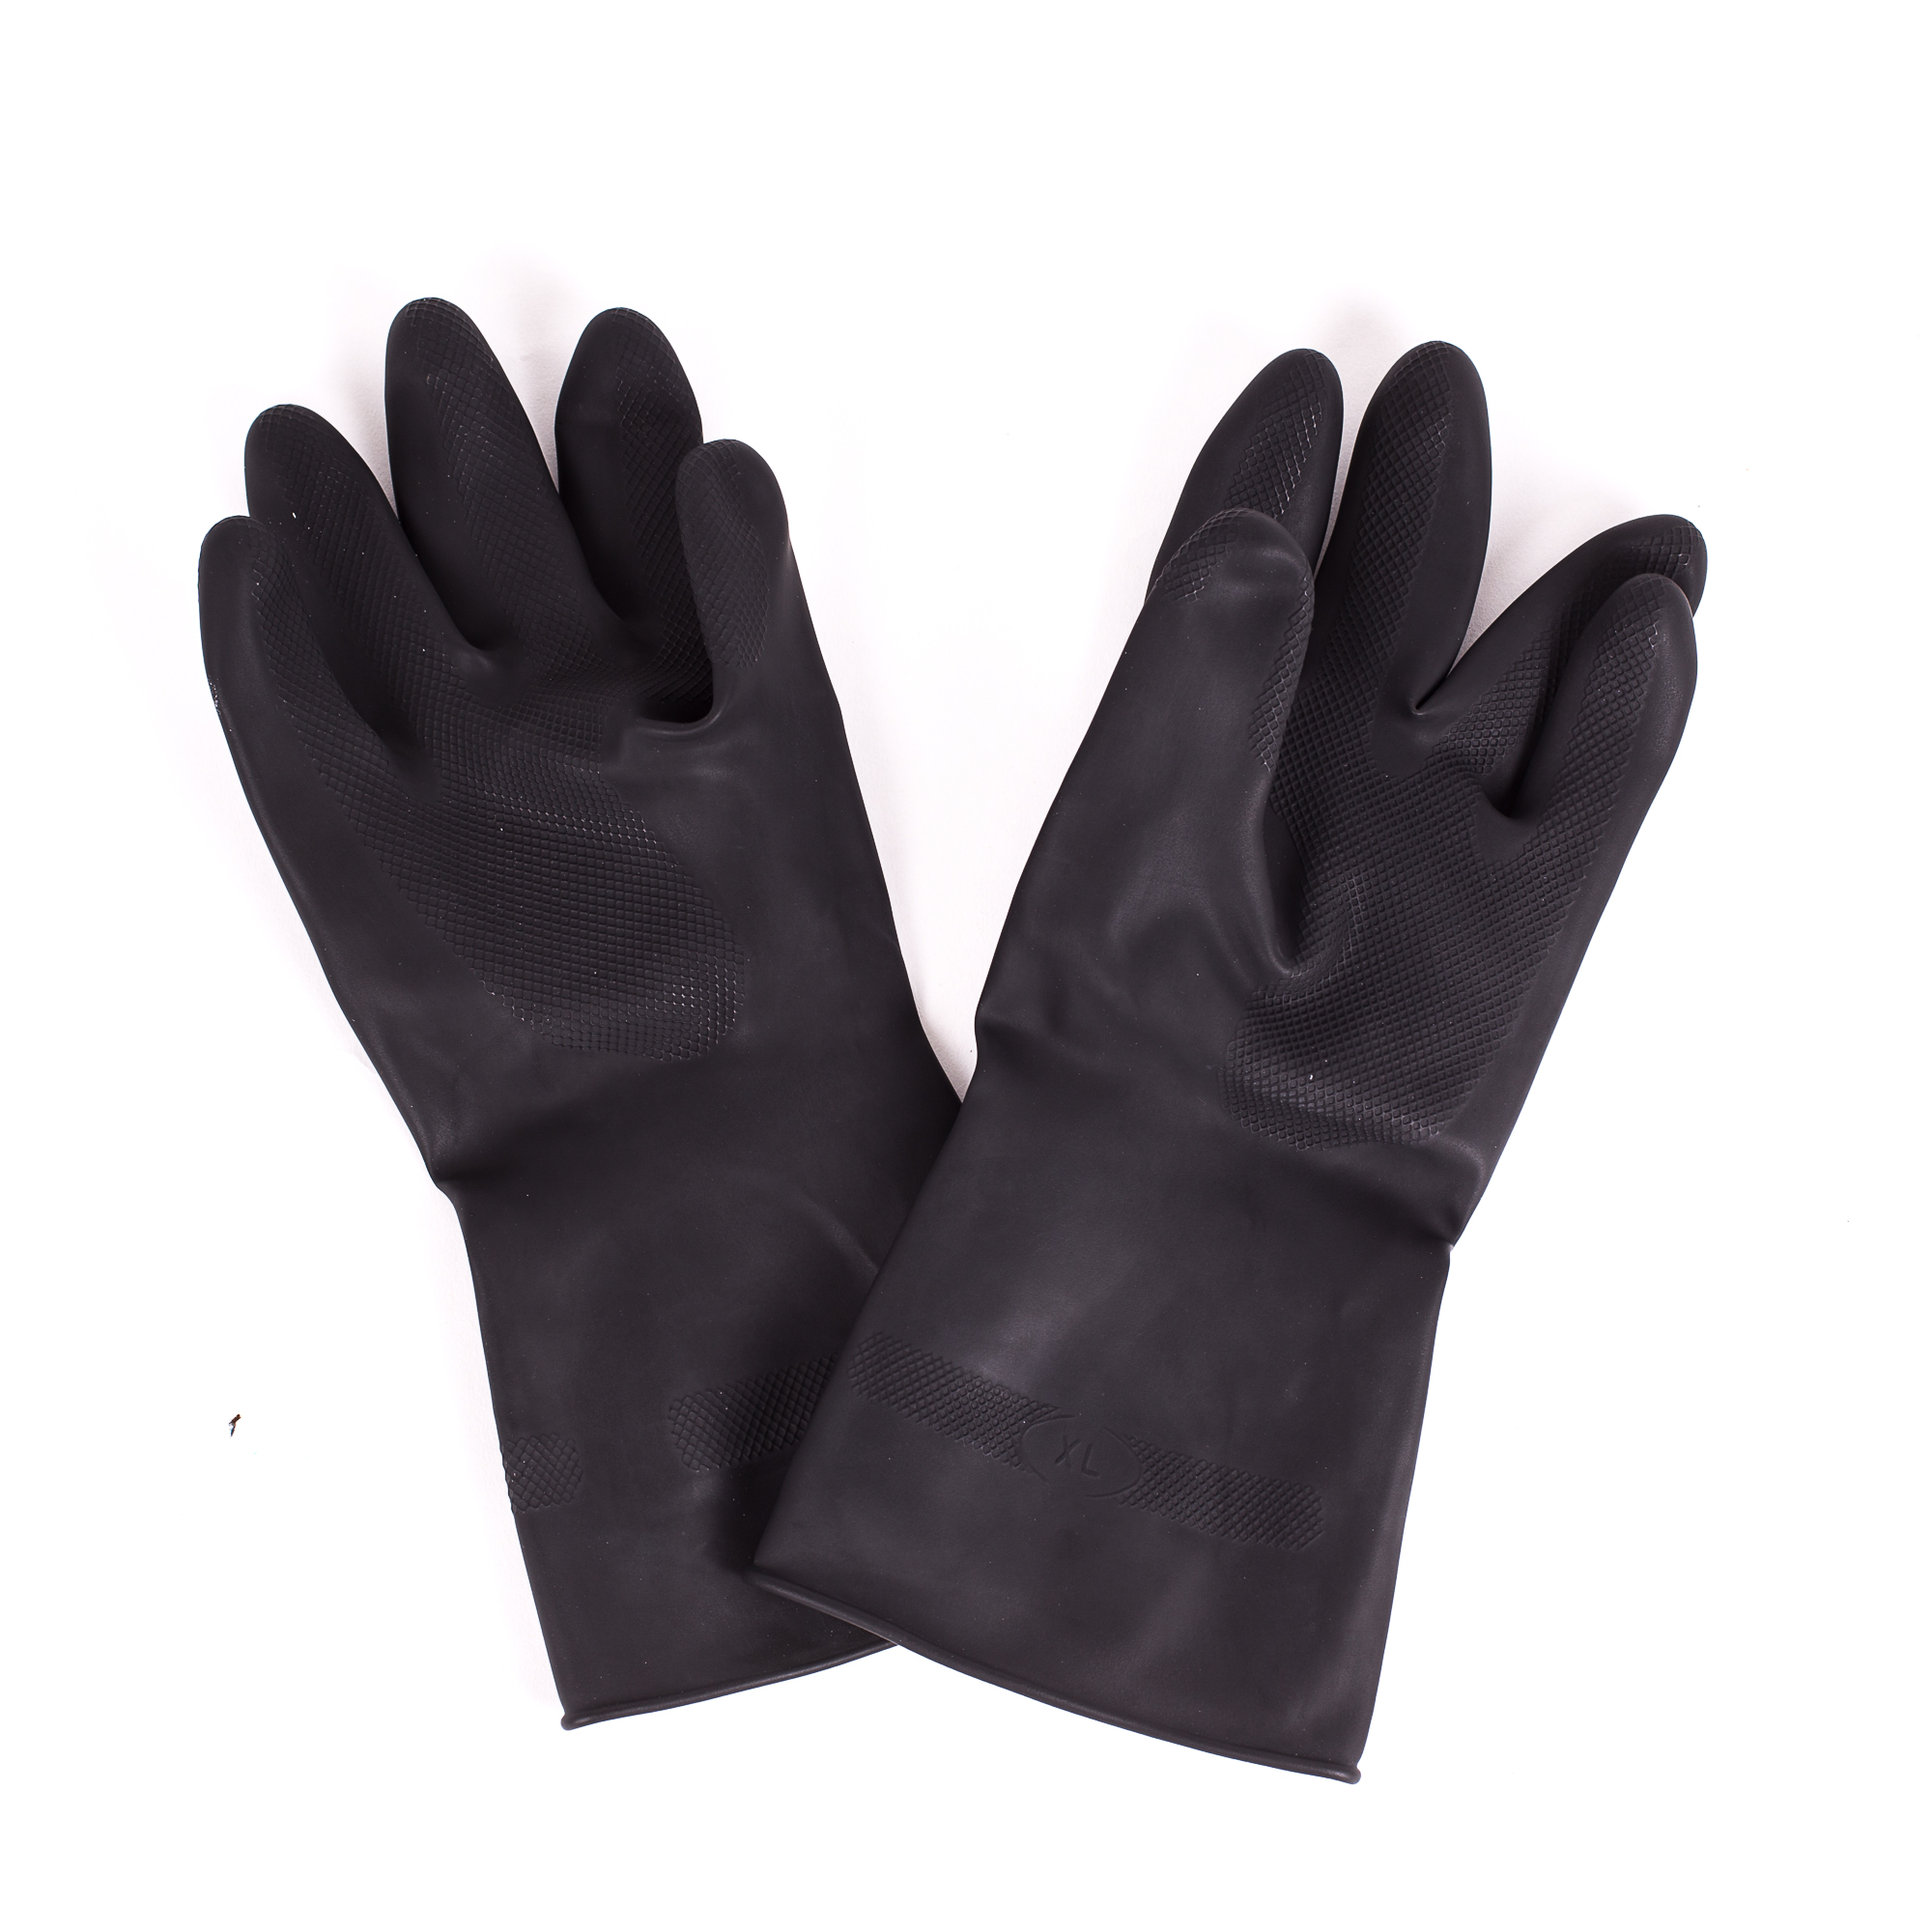 heavy rubber gloves